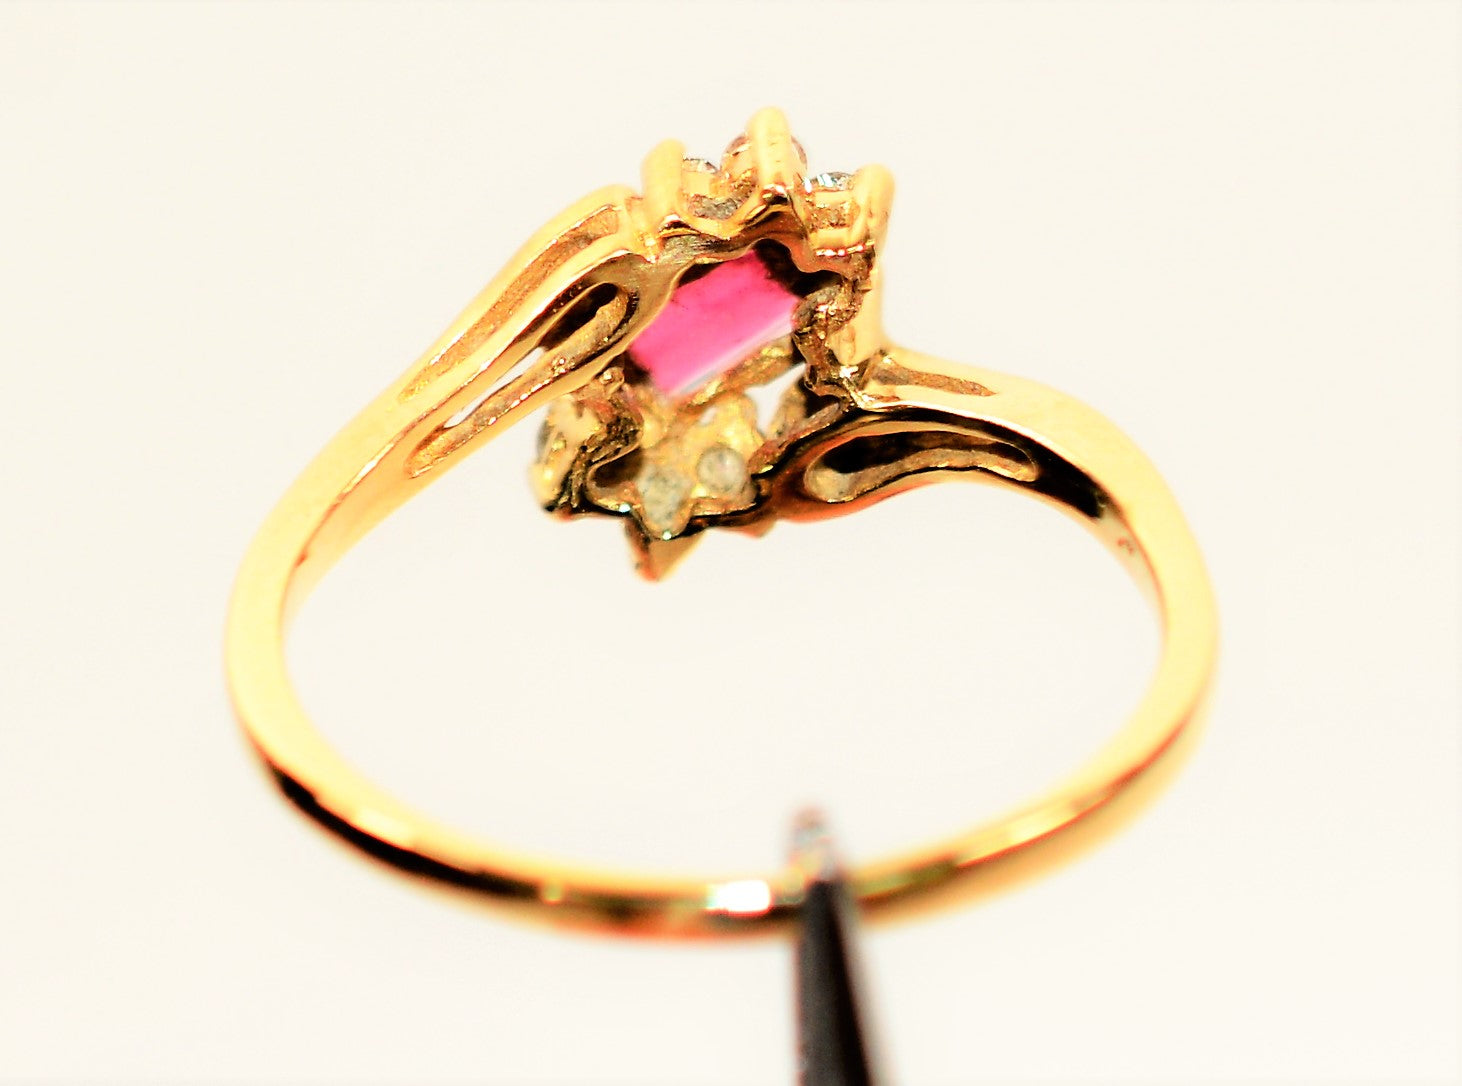 Natural Rubellite & Diamond Ring 14K Solid Gold .67tcw Pink Tourmaline Ring Statement Ring Womens Ring Gemstone Ring Birthstone Ring Jewelry